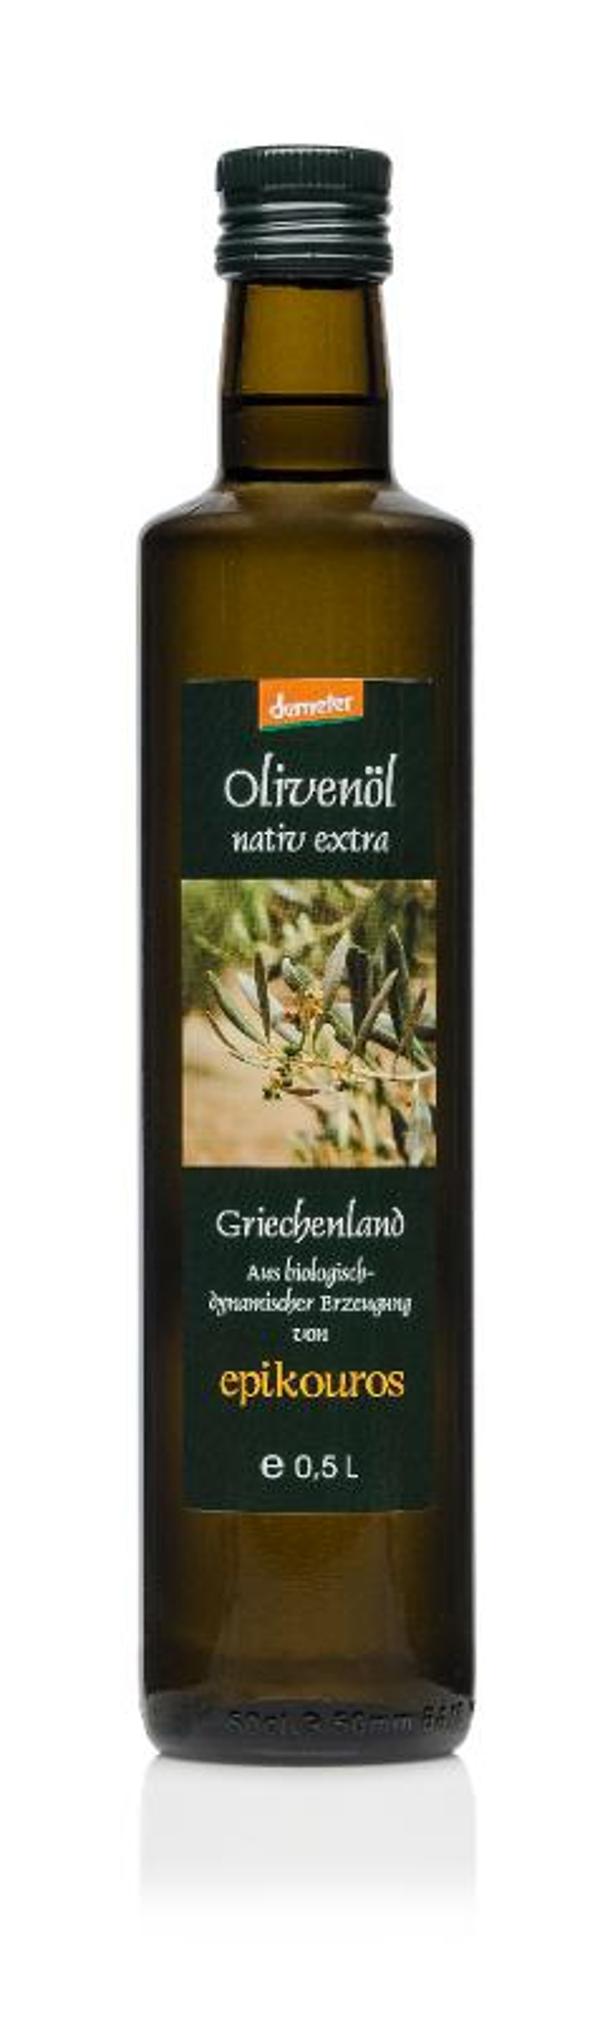 Produktfoto zu Olivenöl nativ, 0,5 l